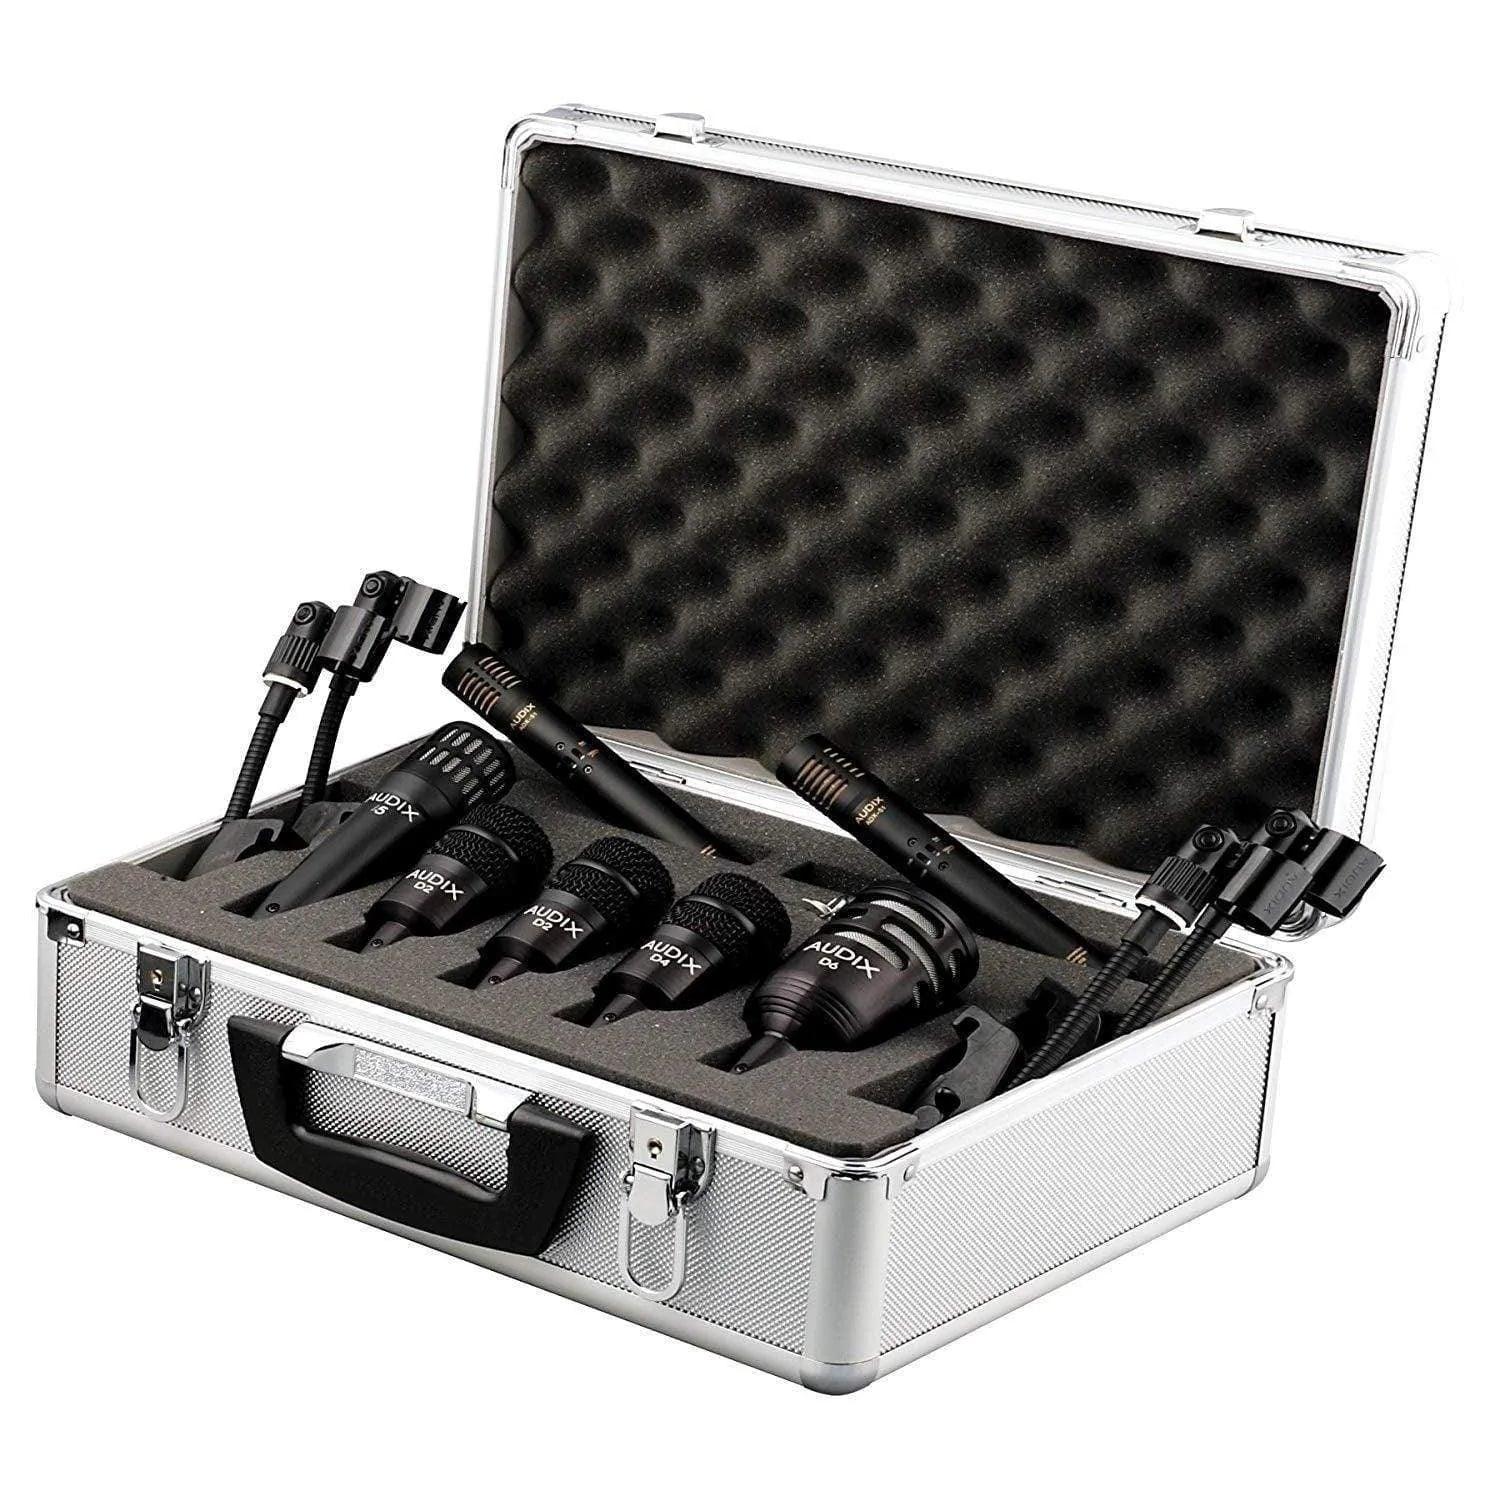 Audix FP7 Fusion Series Drum Microphone